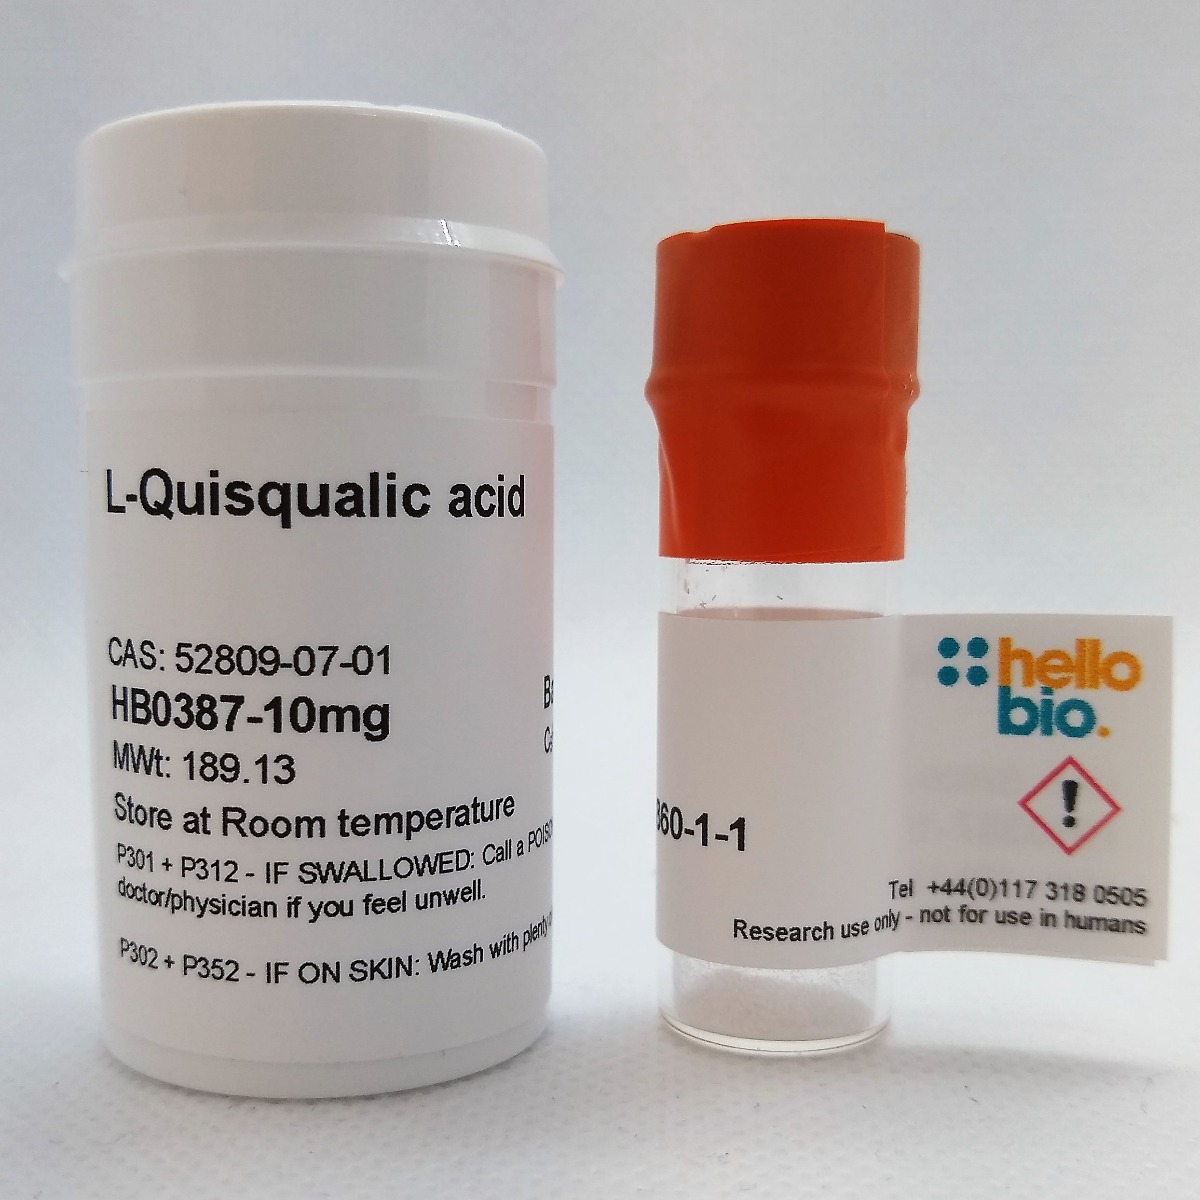 L-Quisqualic acid product vial image | Hello Bio